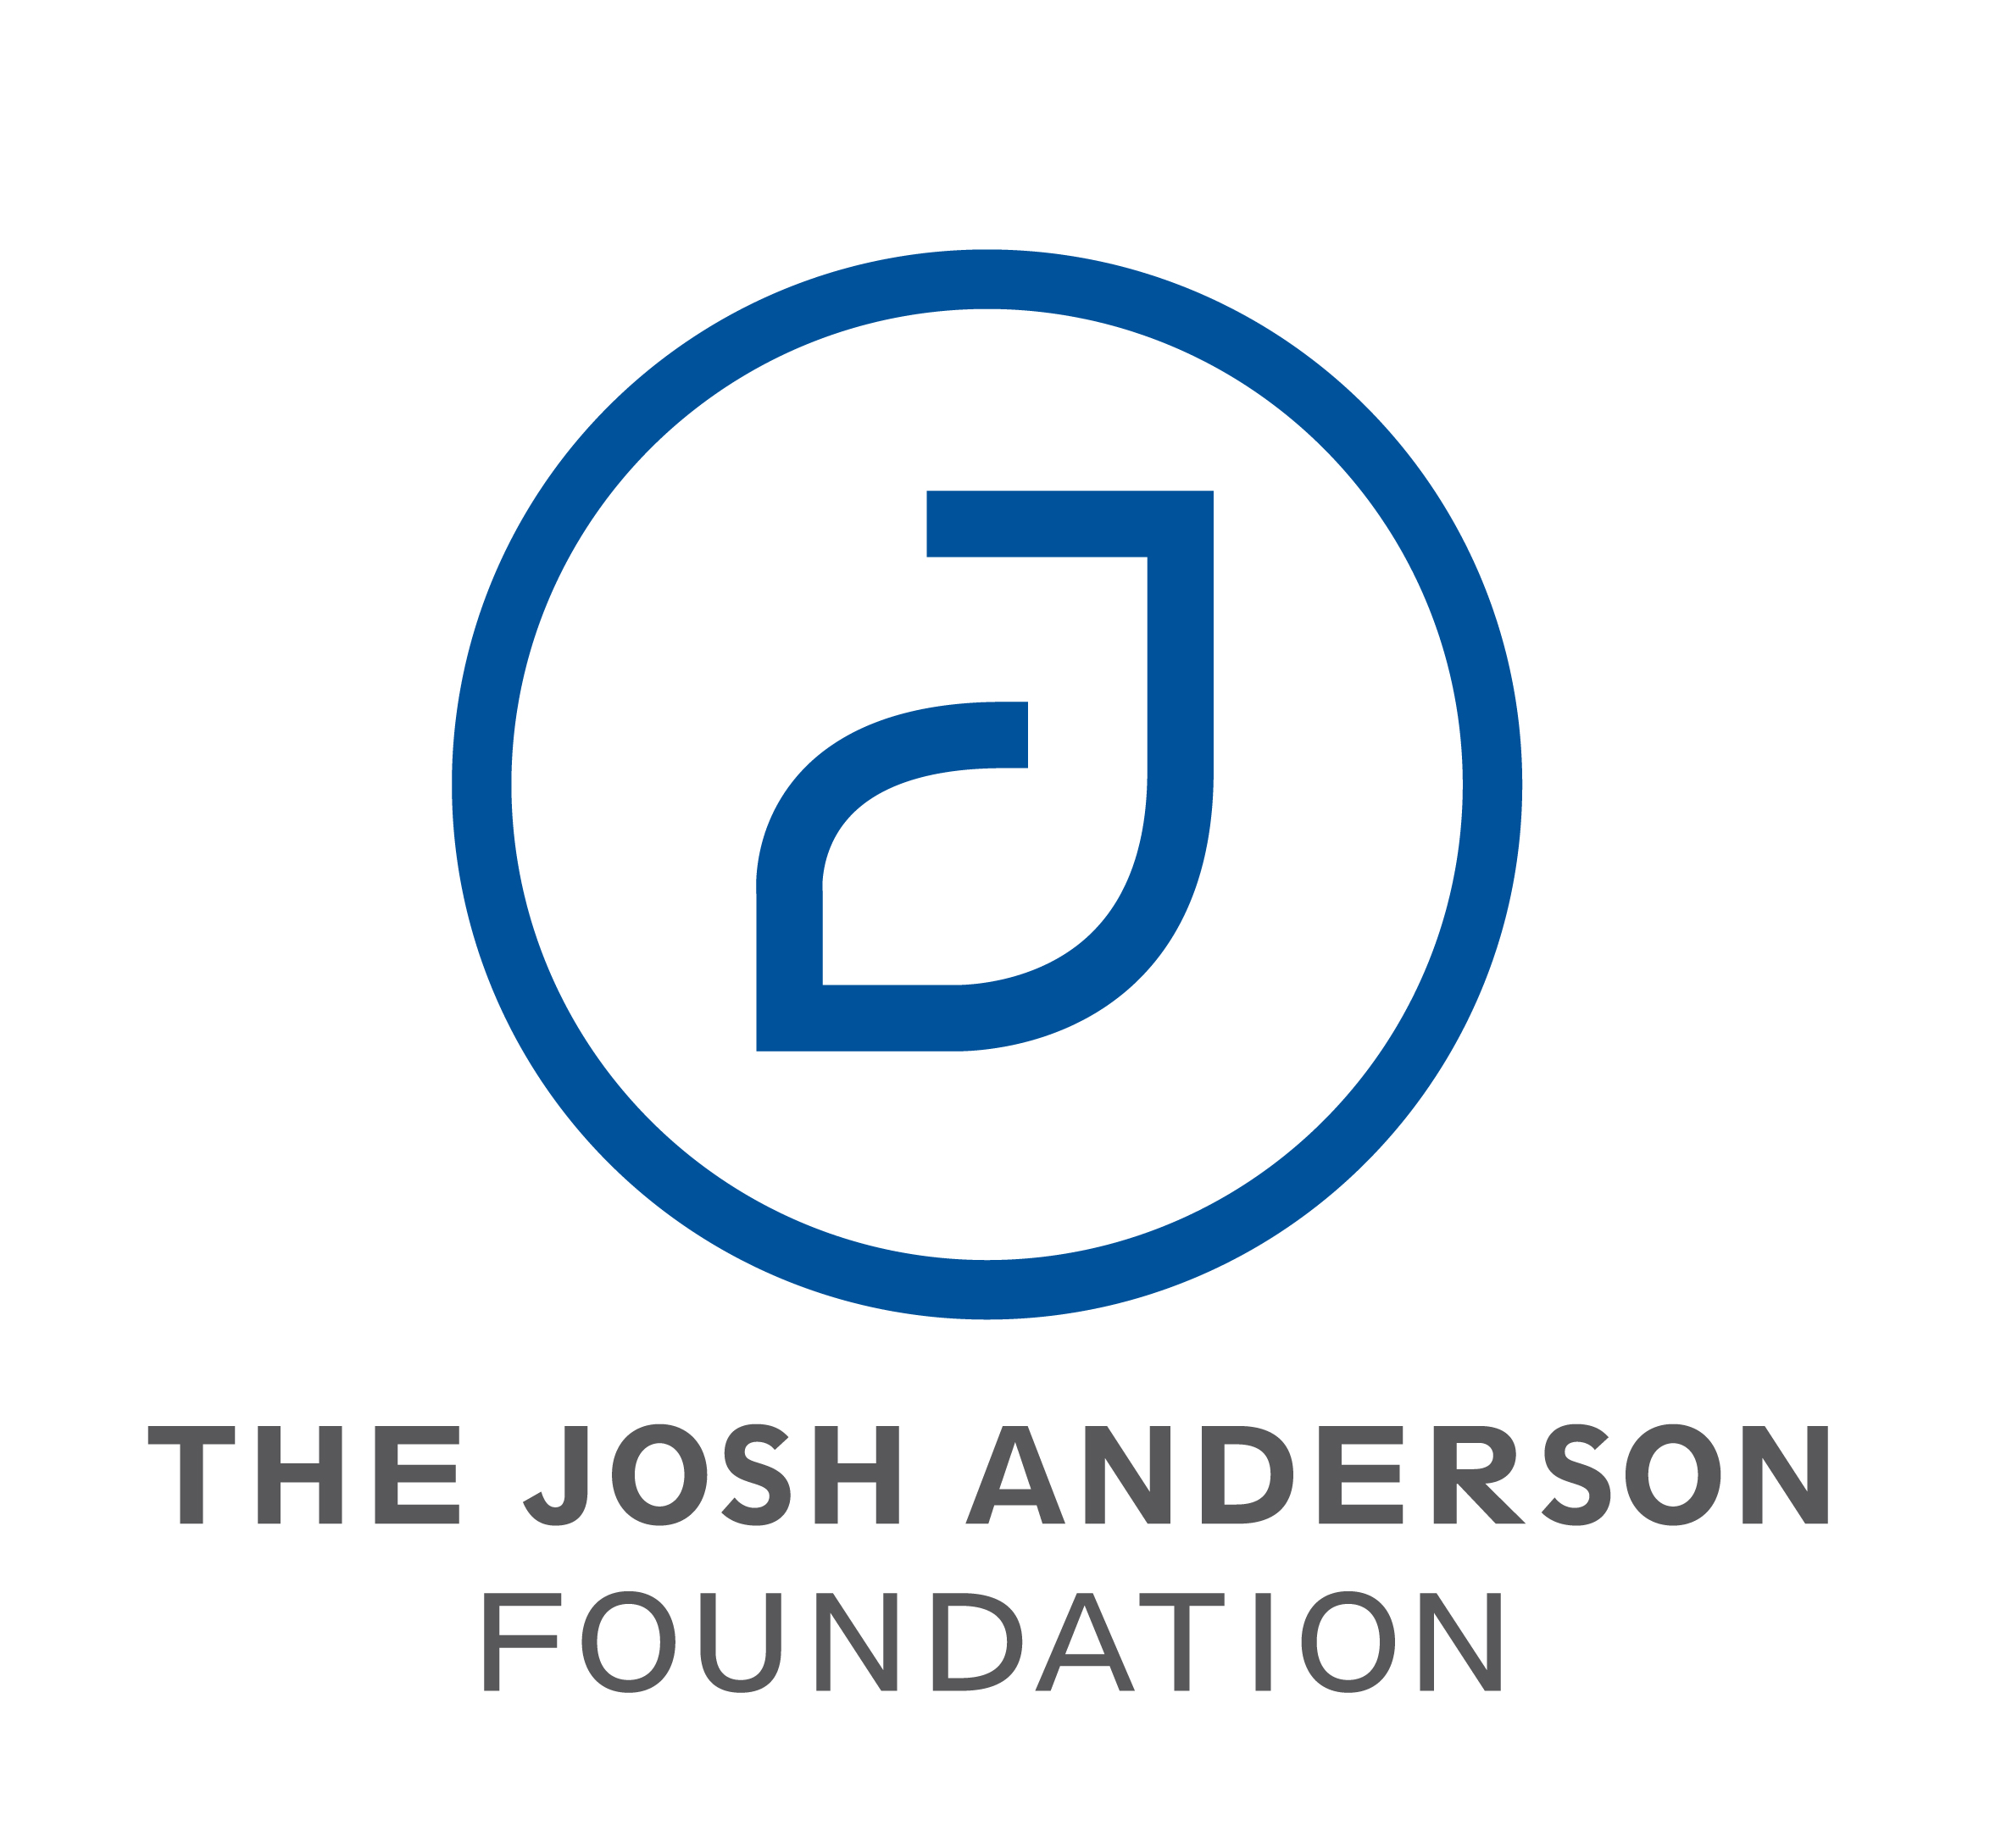 Josh Anderson Foundation (JAF) and Deepak Chopra